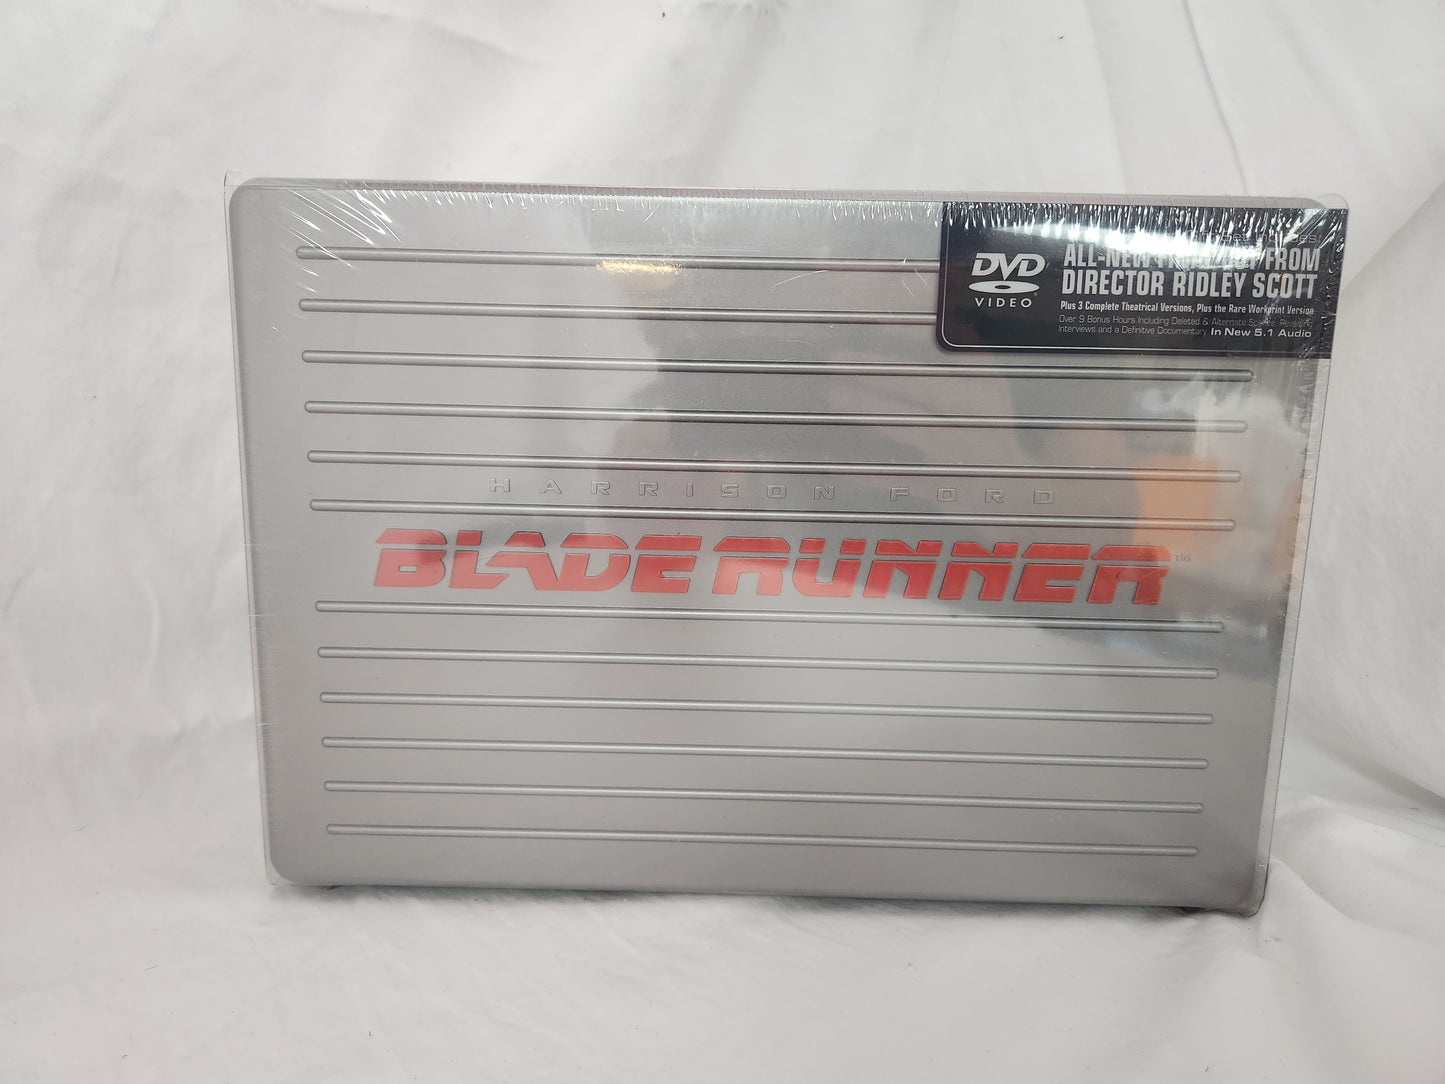 Blade Runner Limited Edition 5-Disc DVD Gift Set